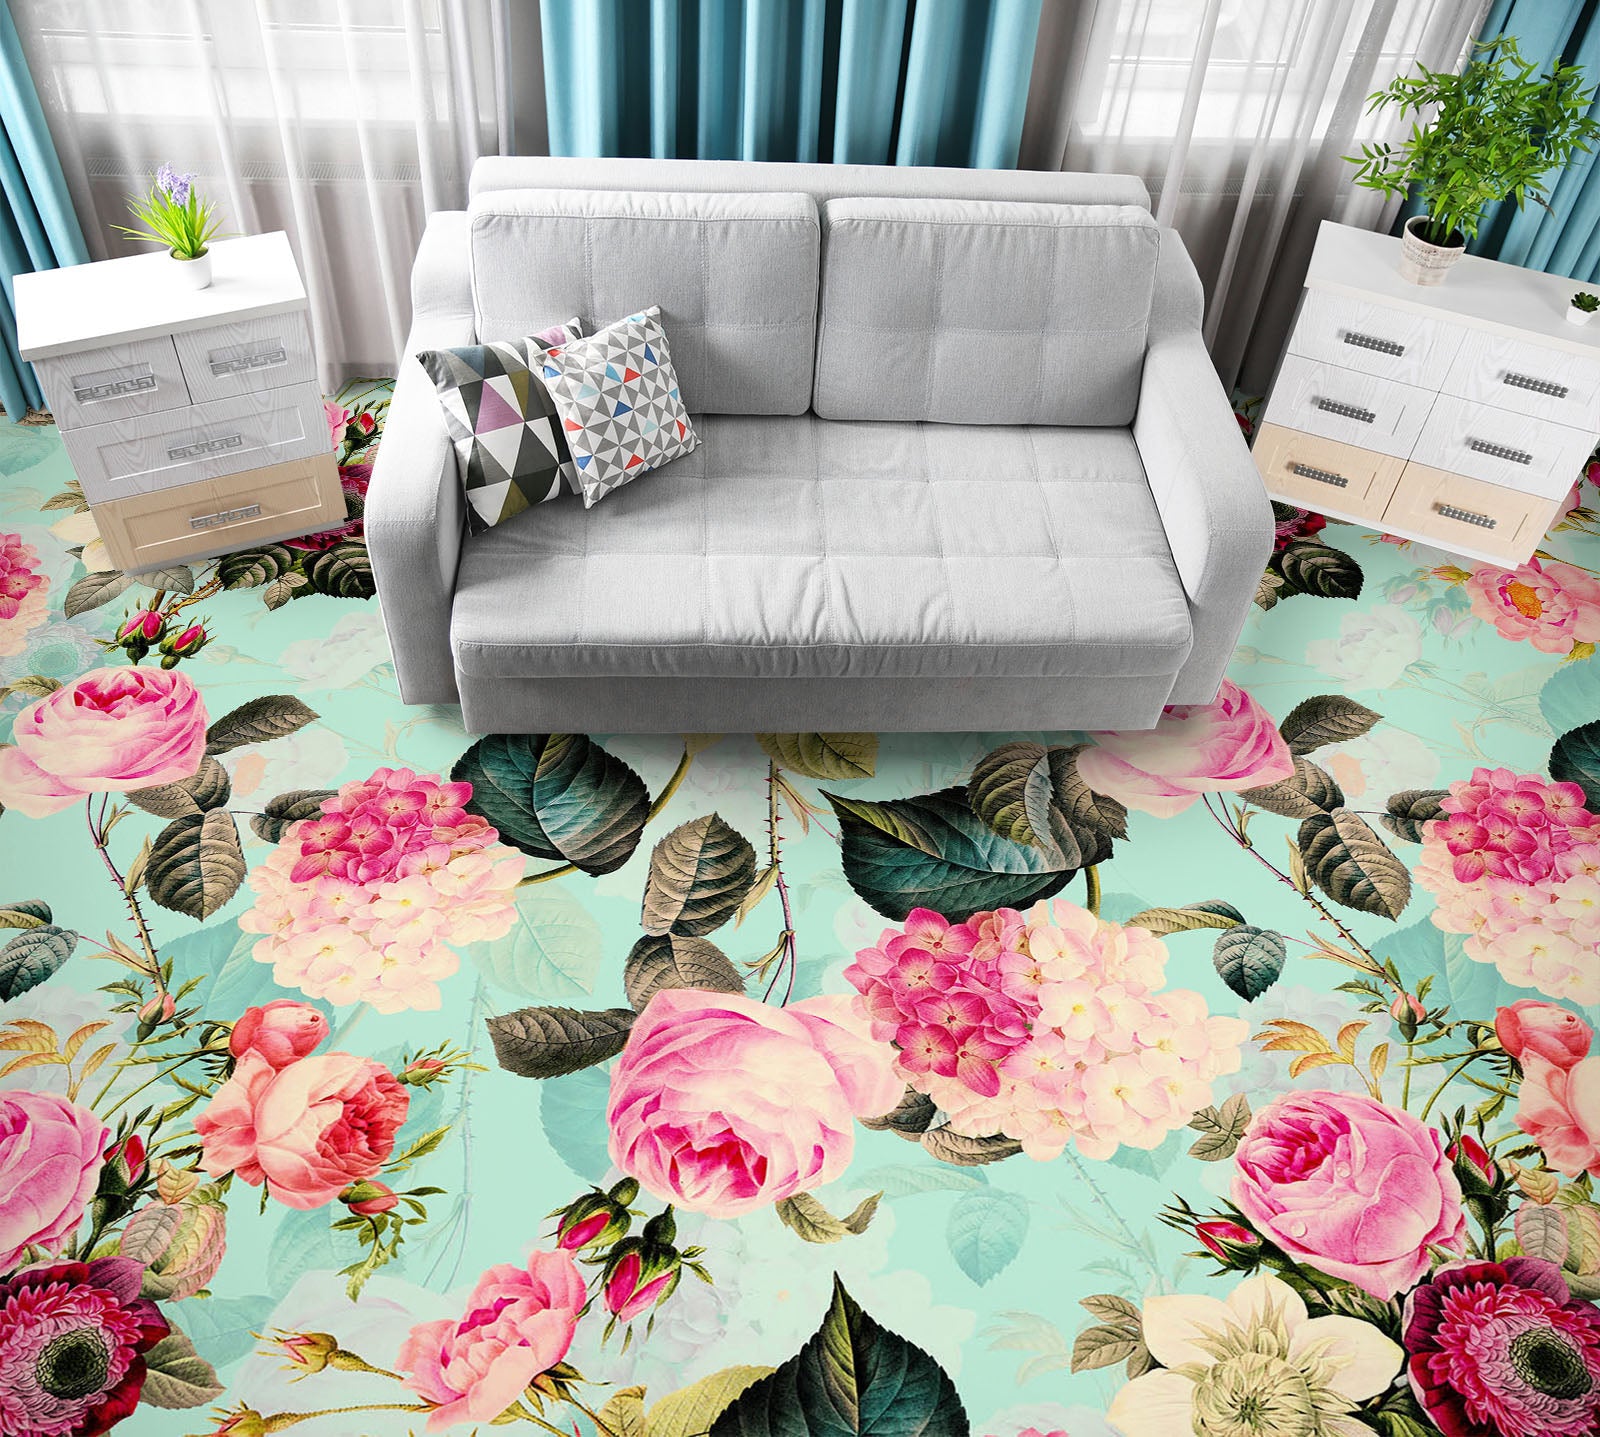 3D Pink Flower Pattern 99208 Uta Naumann Floor Mural  Wallpaper Murals Self-Adhesive Removable Print Epoxy